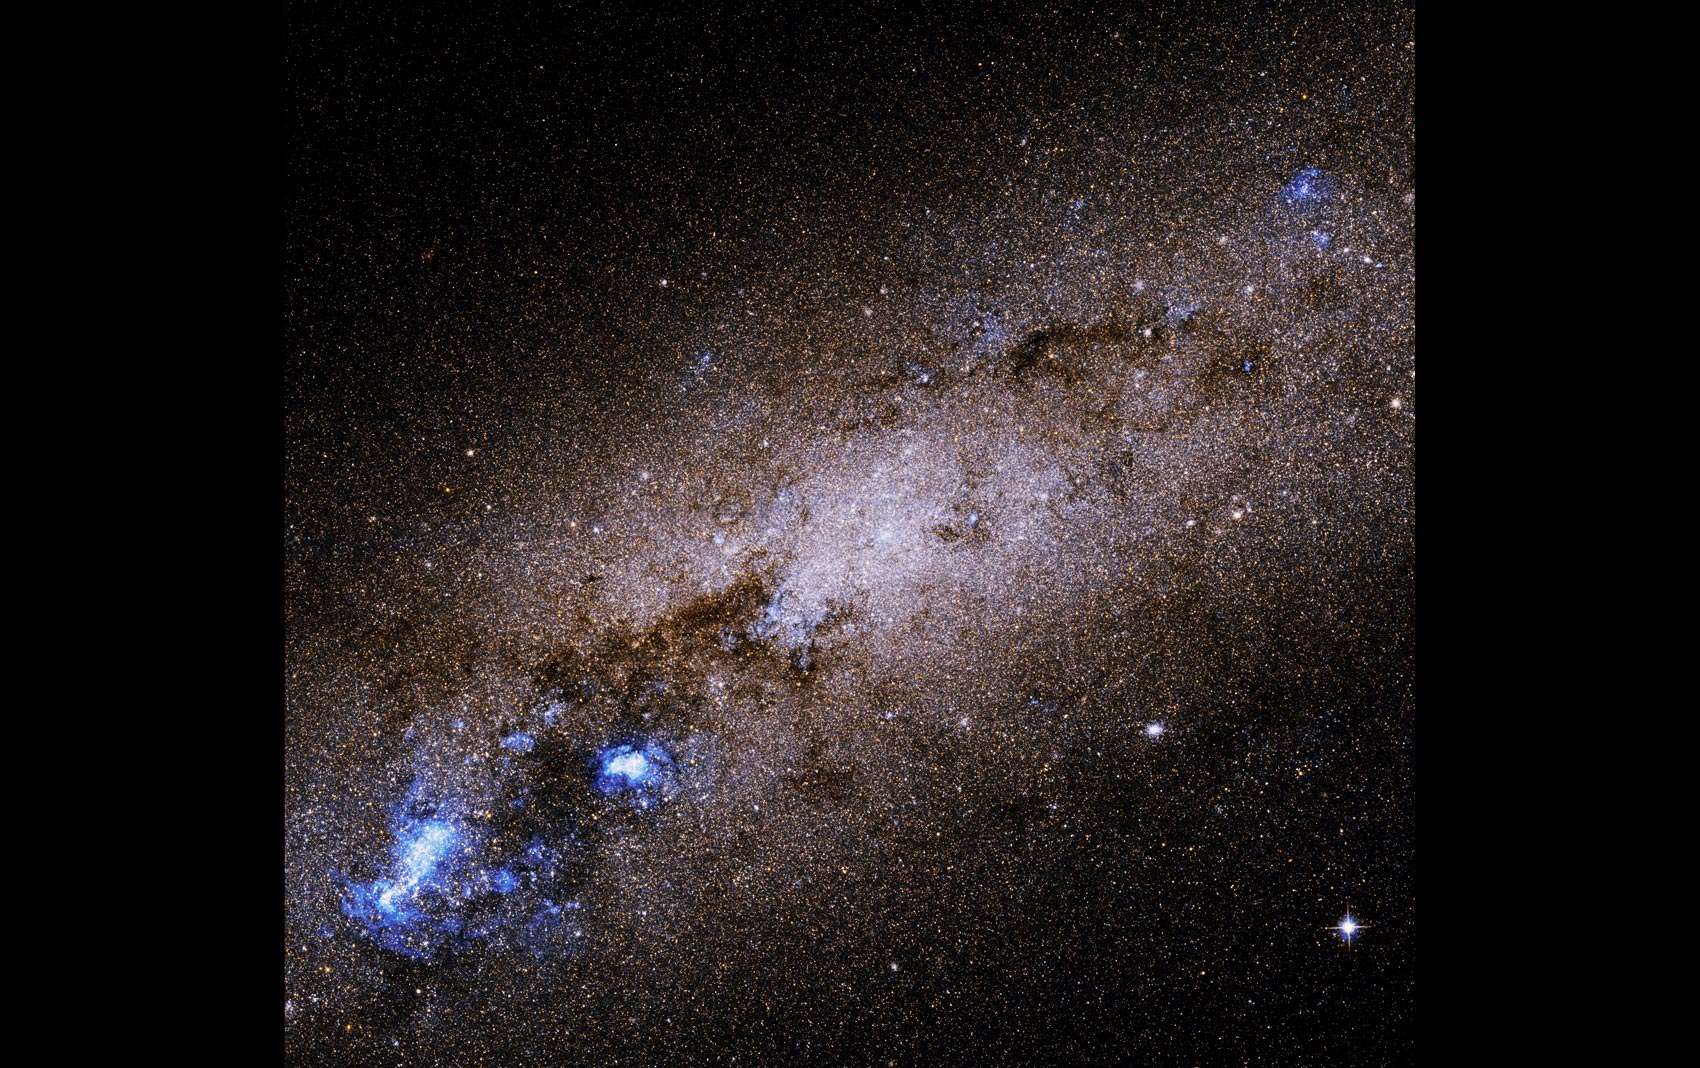 NGC 55, a nearby edge-on dwarf spiral galaxy, seen by Hubble Space Telescope. Credit: NASA, ESA, R. de Jong (Leibniz-Institut fur Astrophysik Potsdam [AIP]), and G. Illingworth (University of California – Santa Cruz)